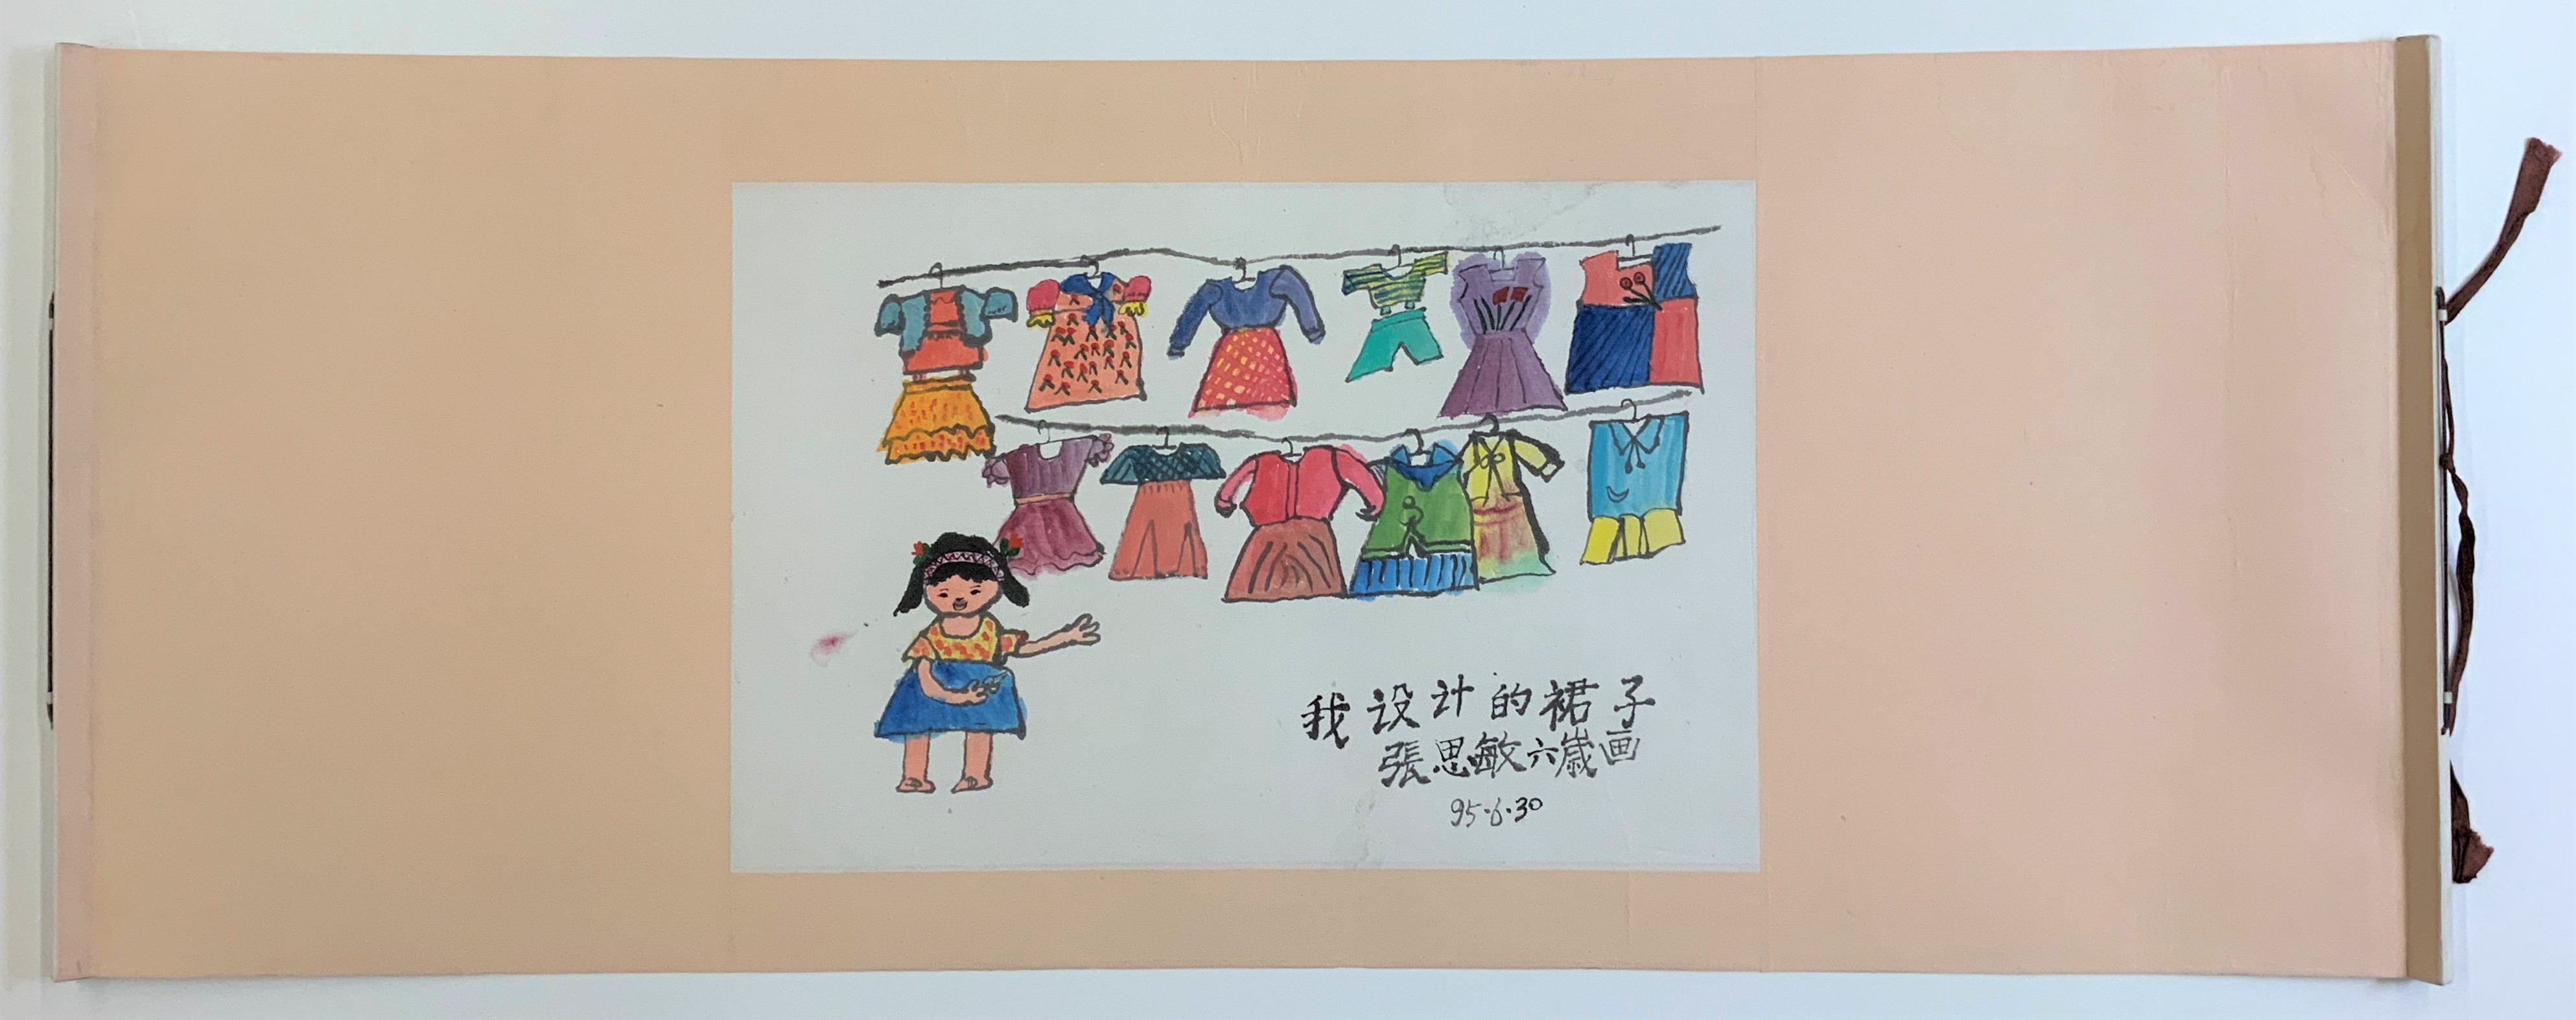 After conservation. Translation of inscription: “Dresses I Designed” By Simin Zhang, 6 years old, 30 June 1995. 